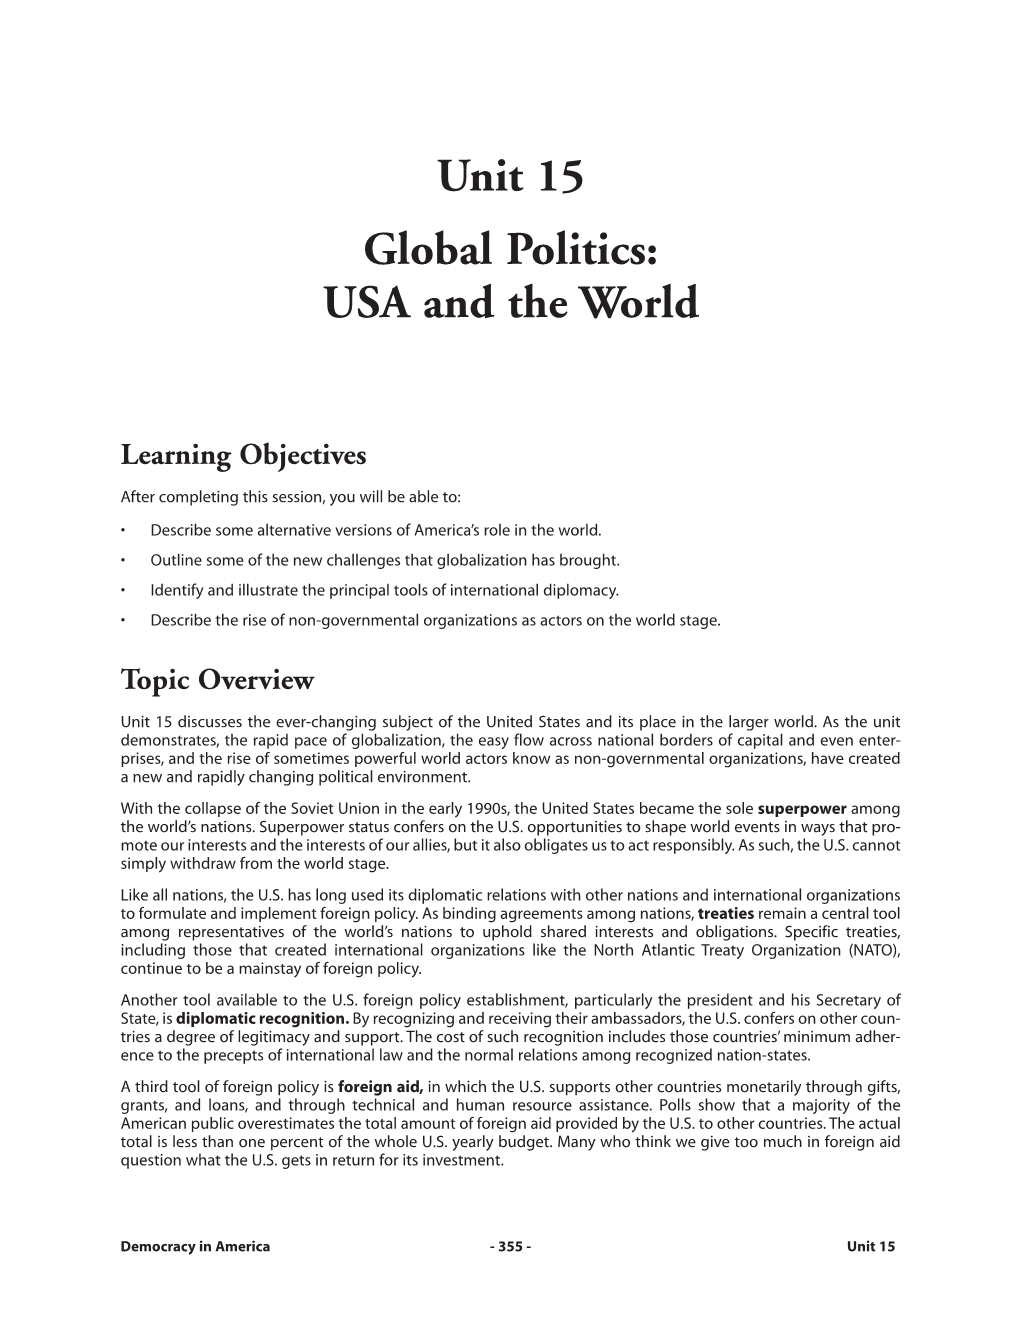 Unit 15 Global Politics: USA and the World